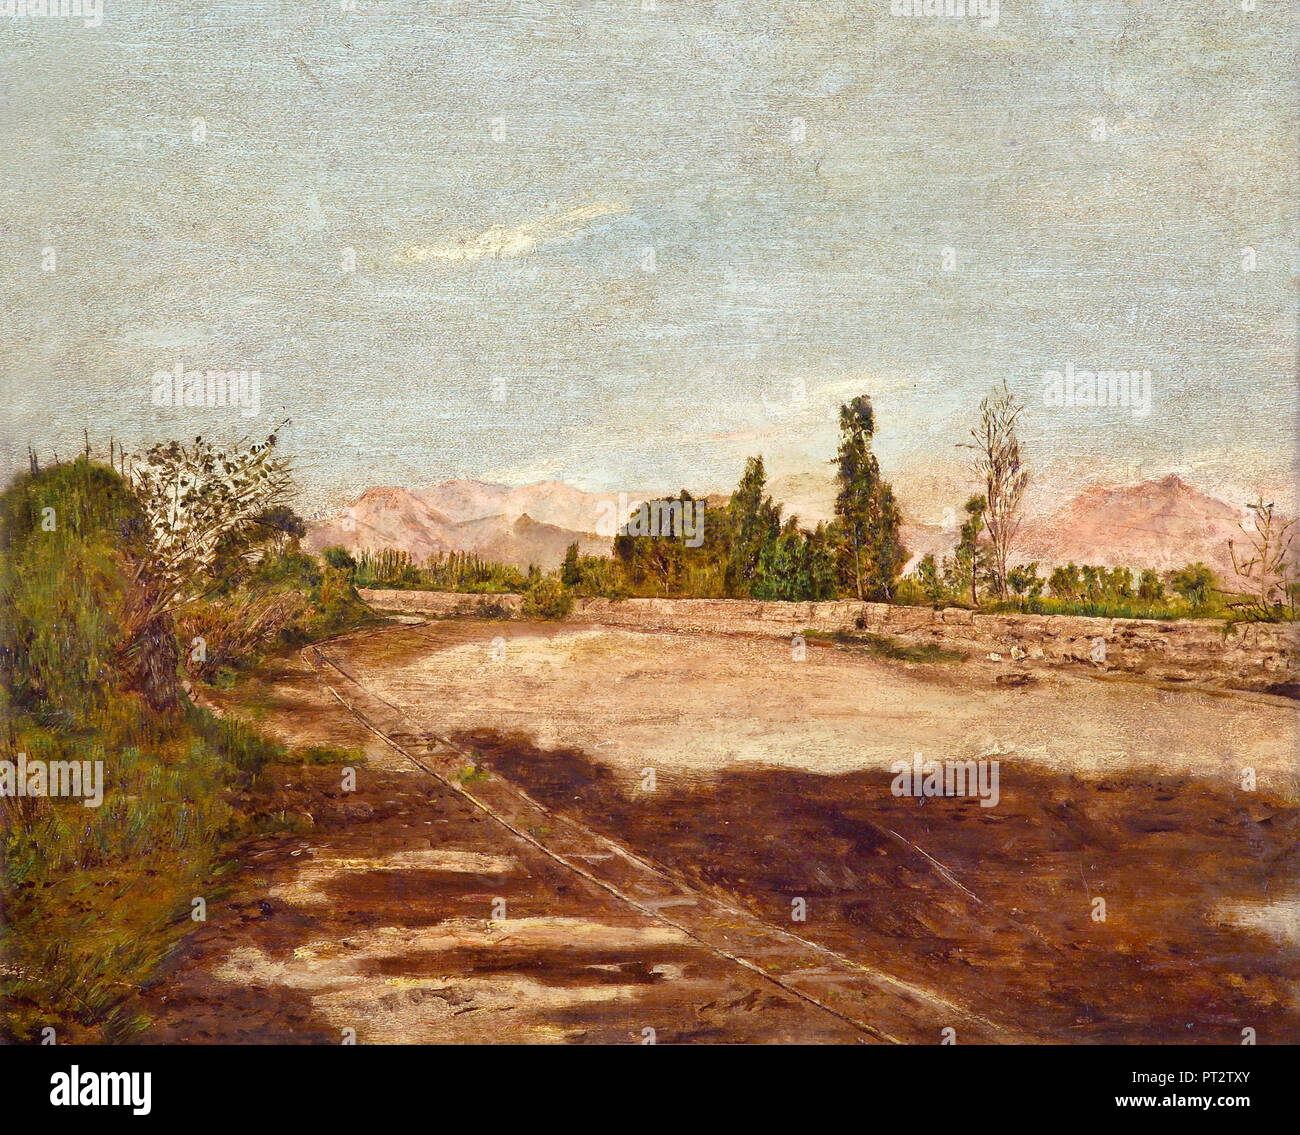 Jose Maria Eguren, Lima's Landschaft, ca. 1900-1915 Öl auf Leinwand, Lima Art Museum (MALI), Lima, Peru. Stockfoto